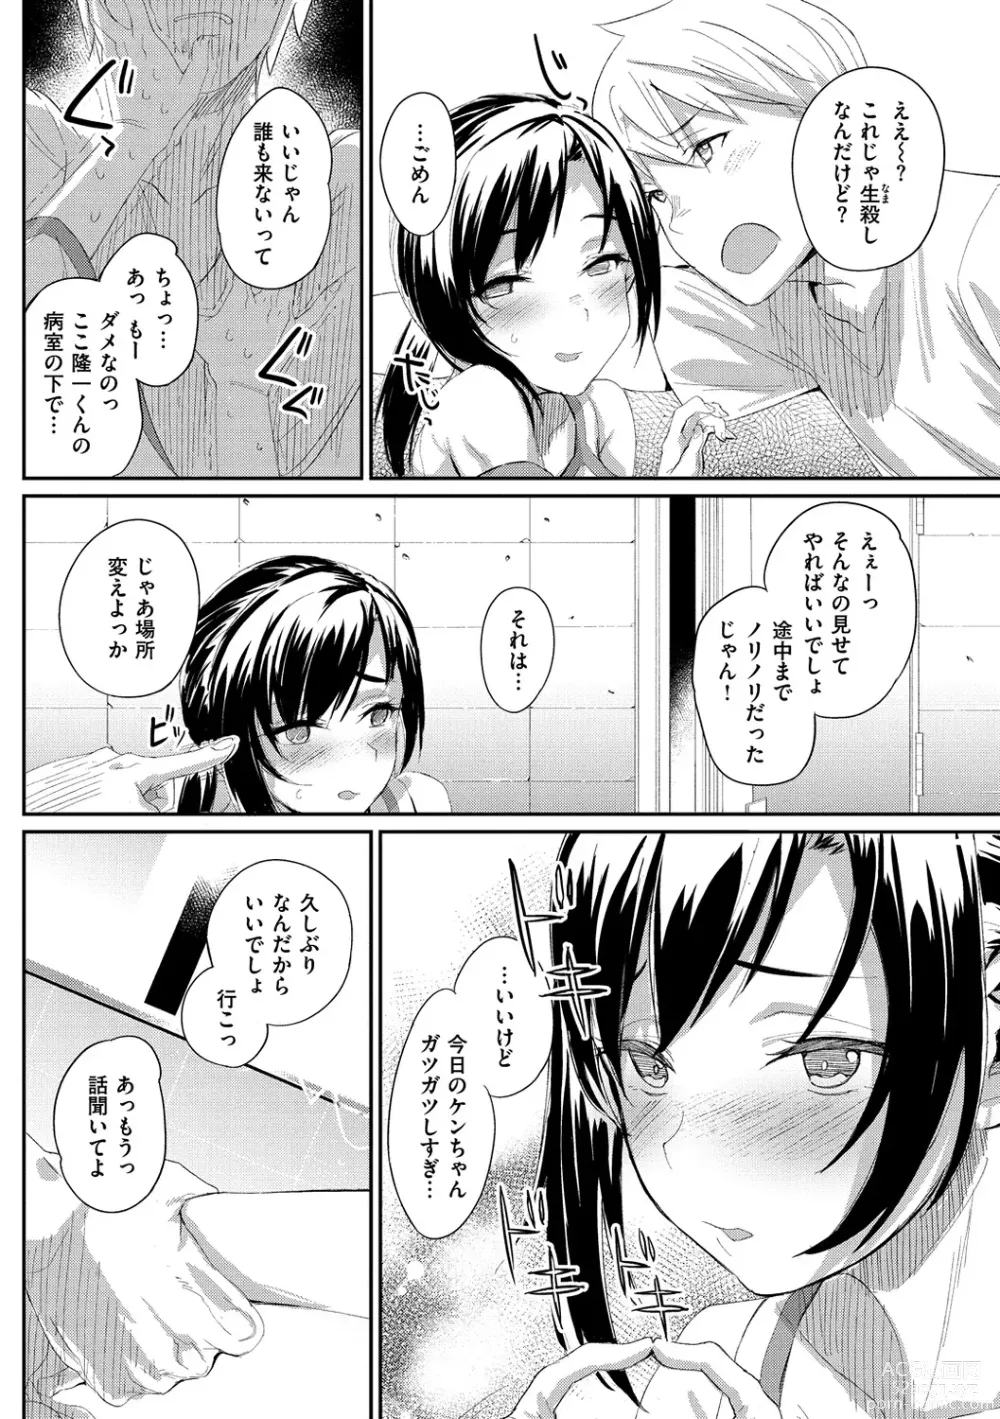 Page 189 of manga Himitsu no Decoration